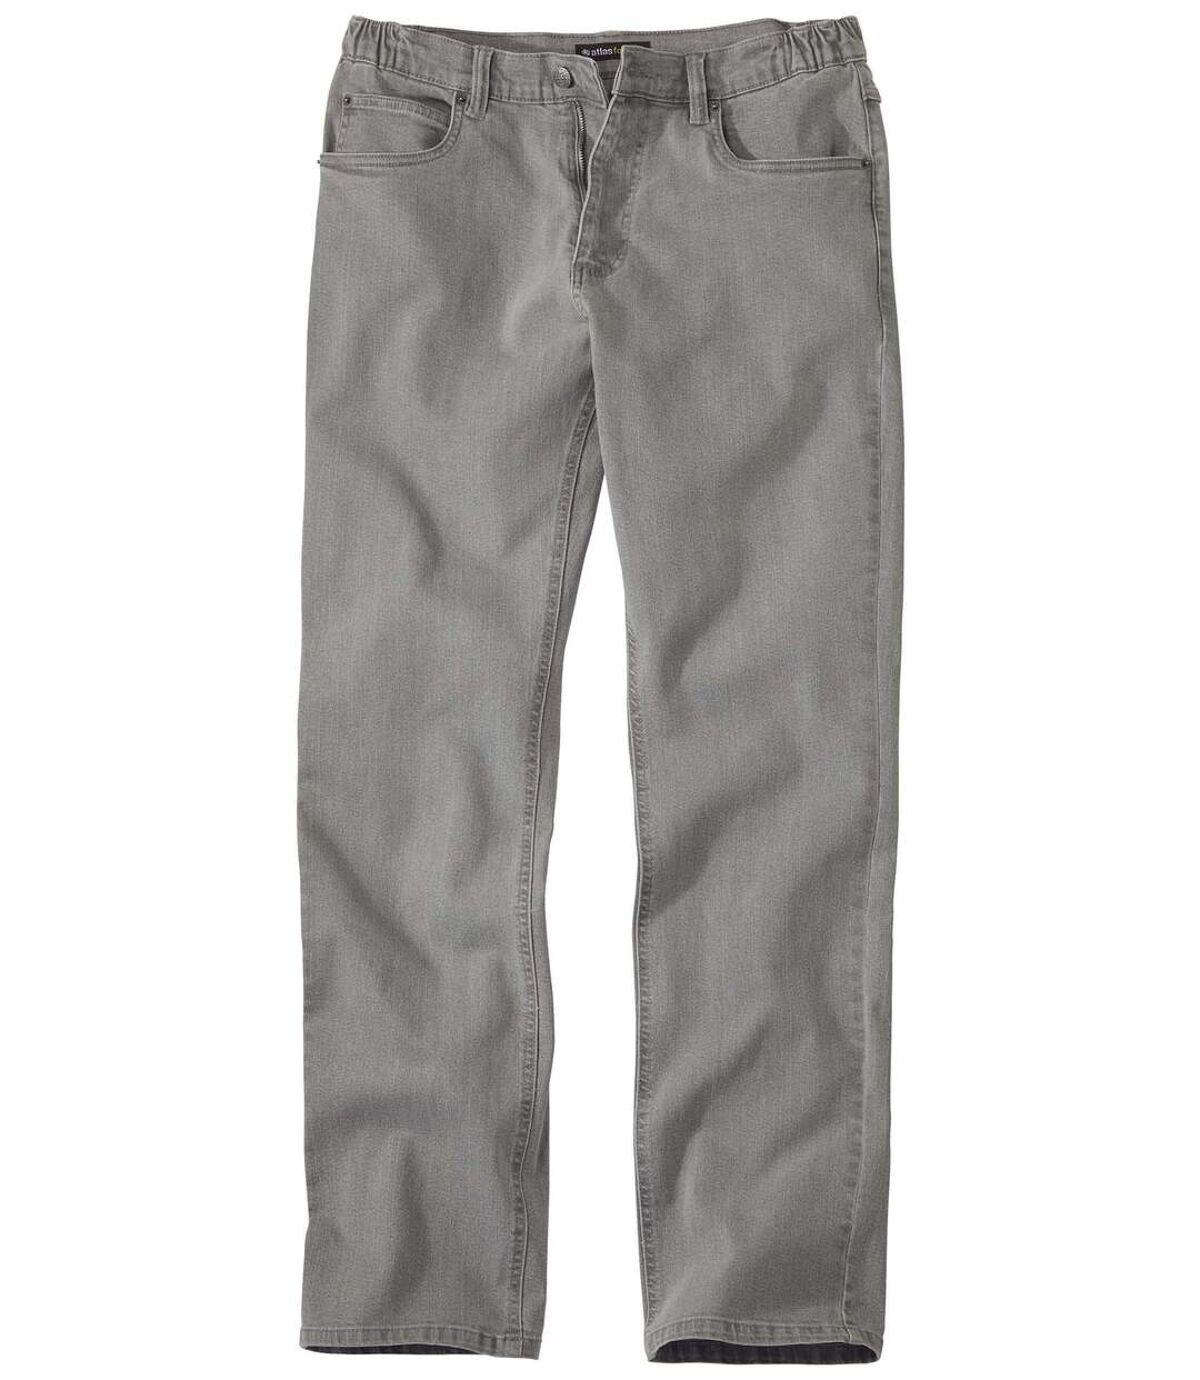 Šedé strečové džíny s pasem nabraným po stranách do gumy Atlas For Men